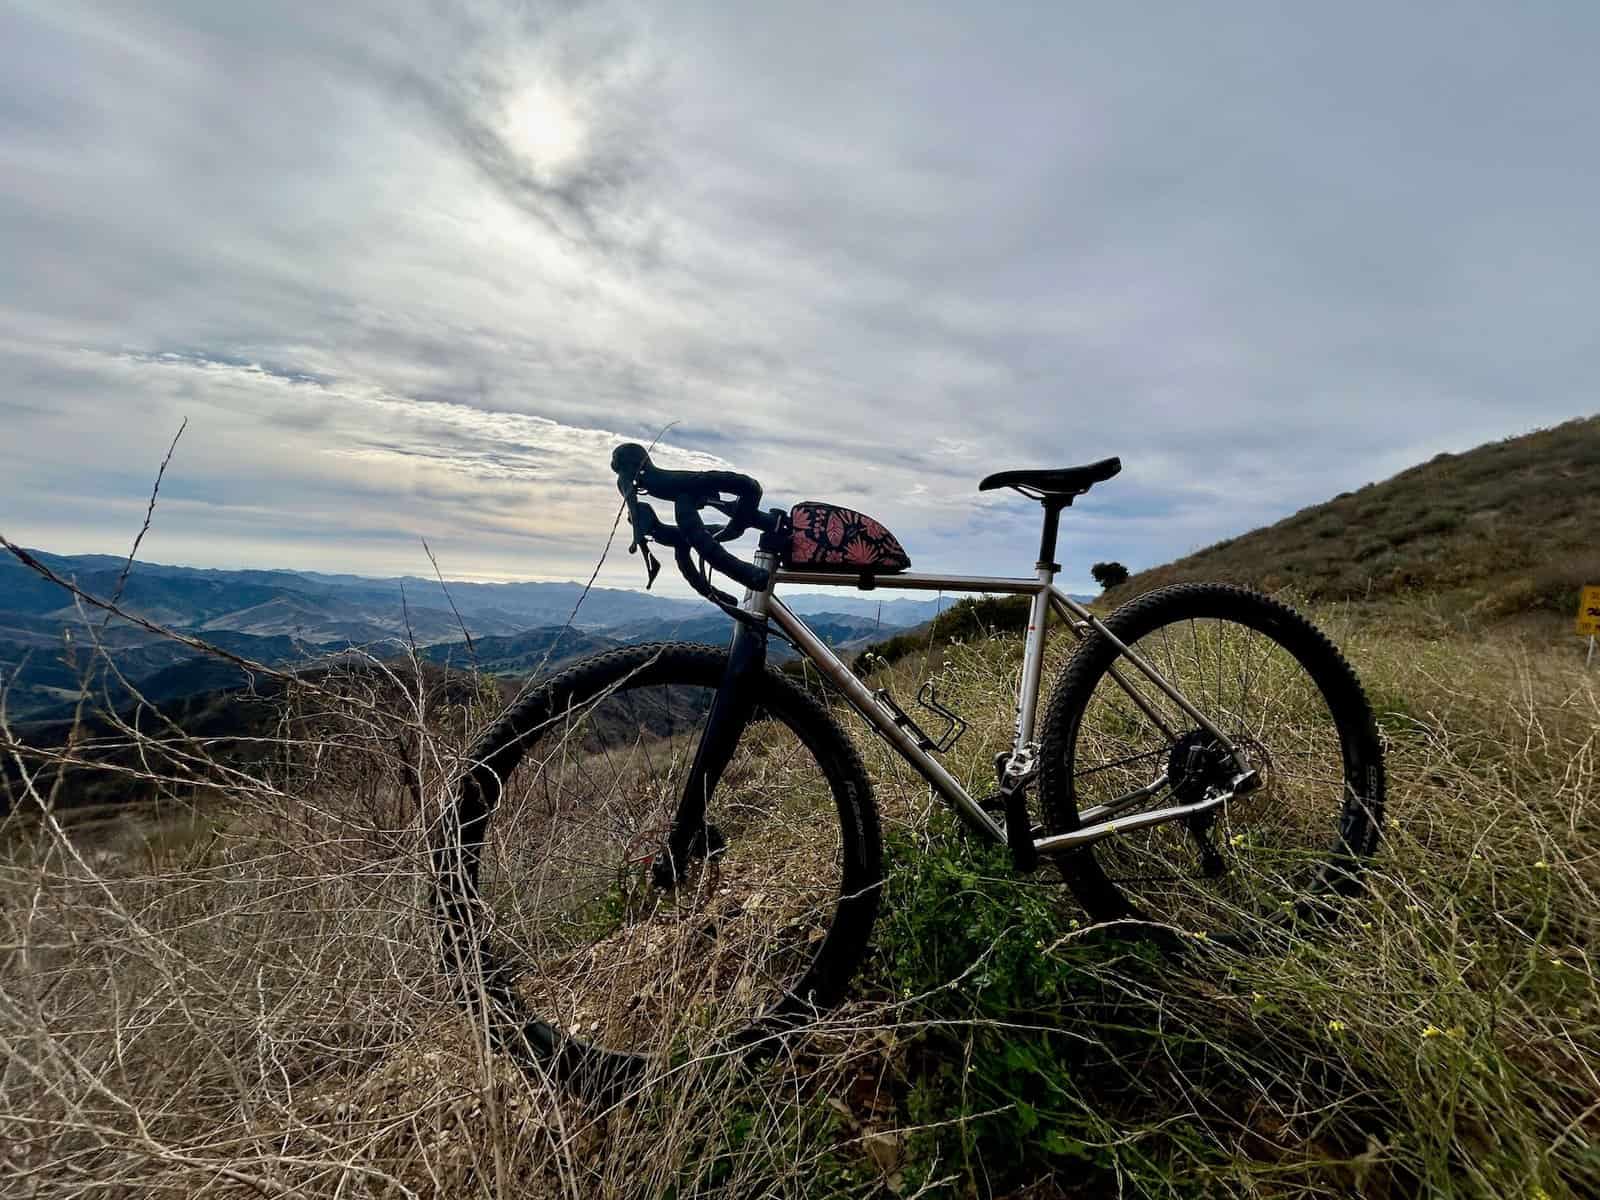 Gravel bike propped up for photo on Sulphur Mountain Trail in Ojai, California